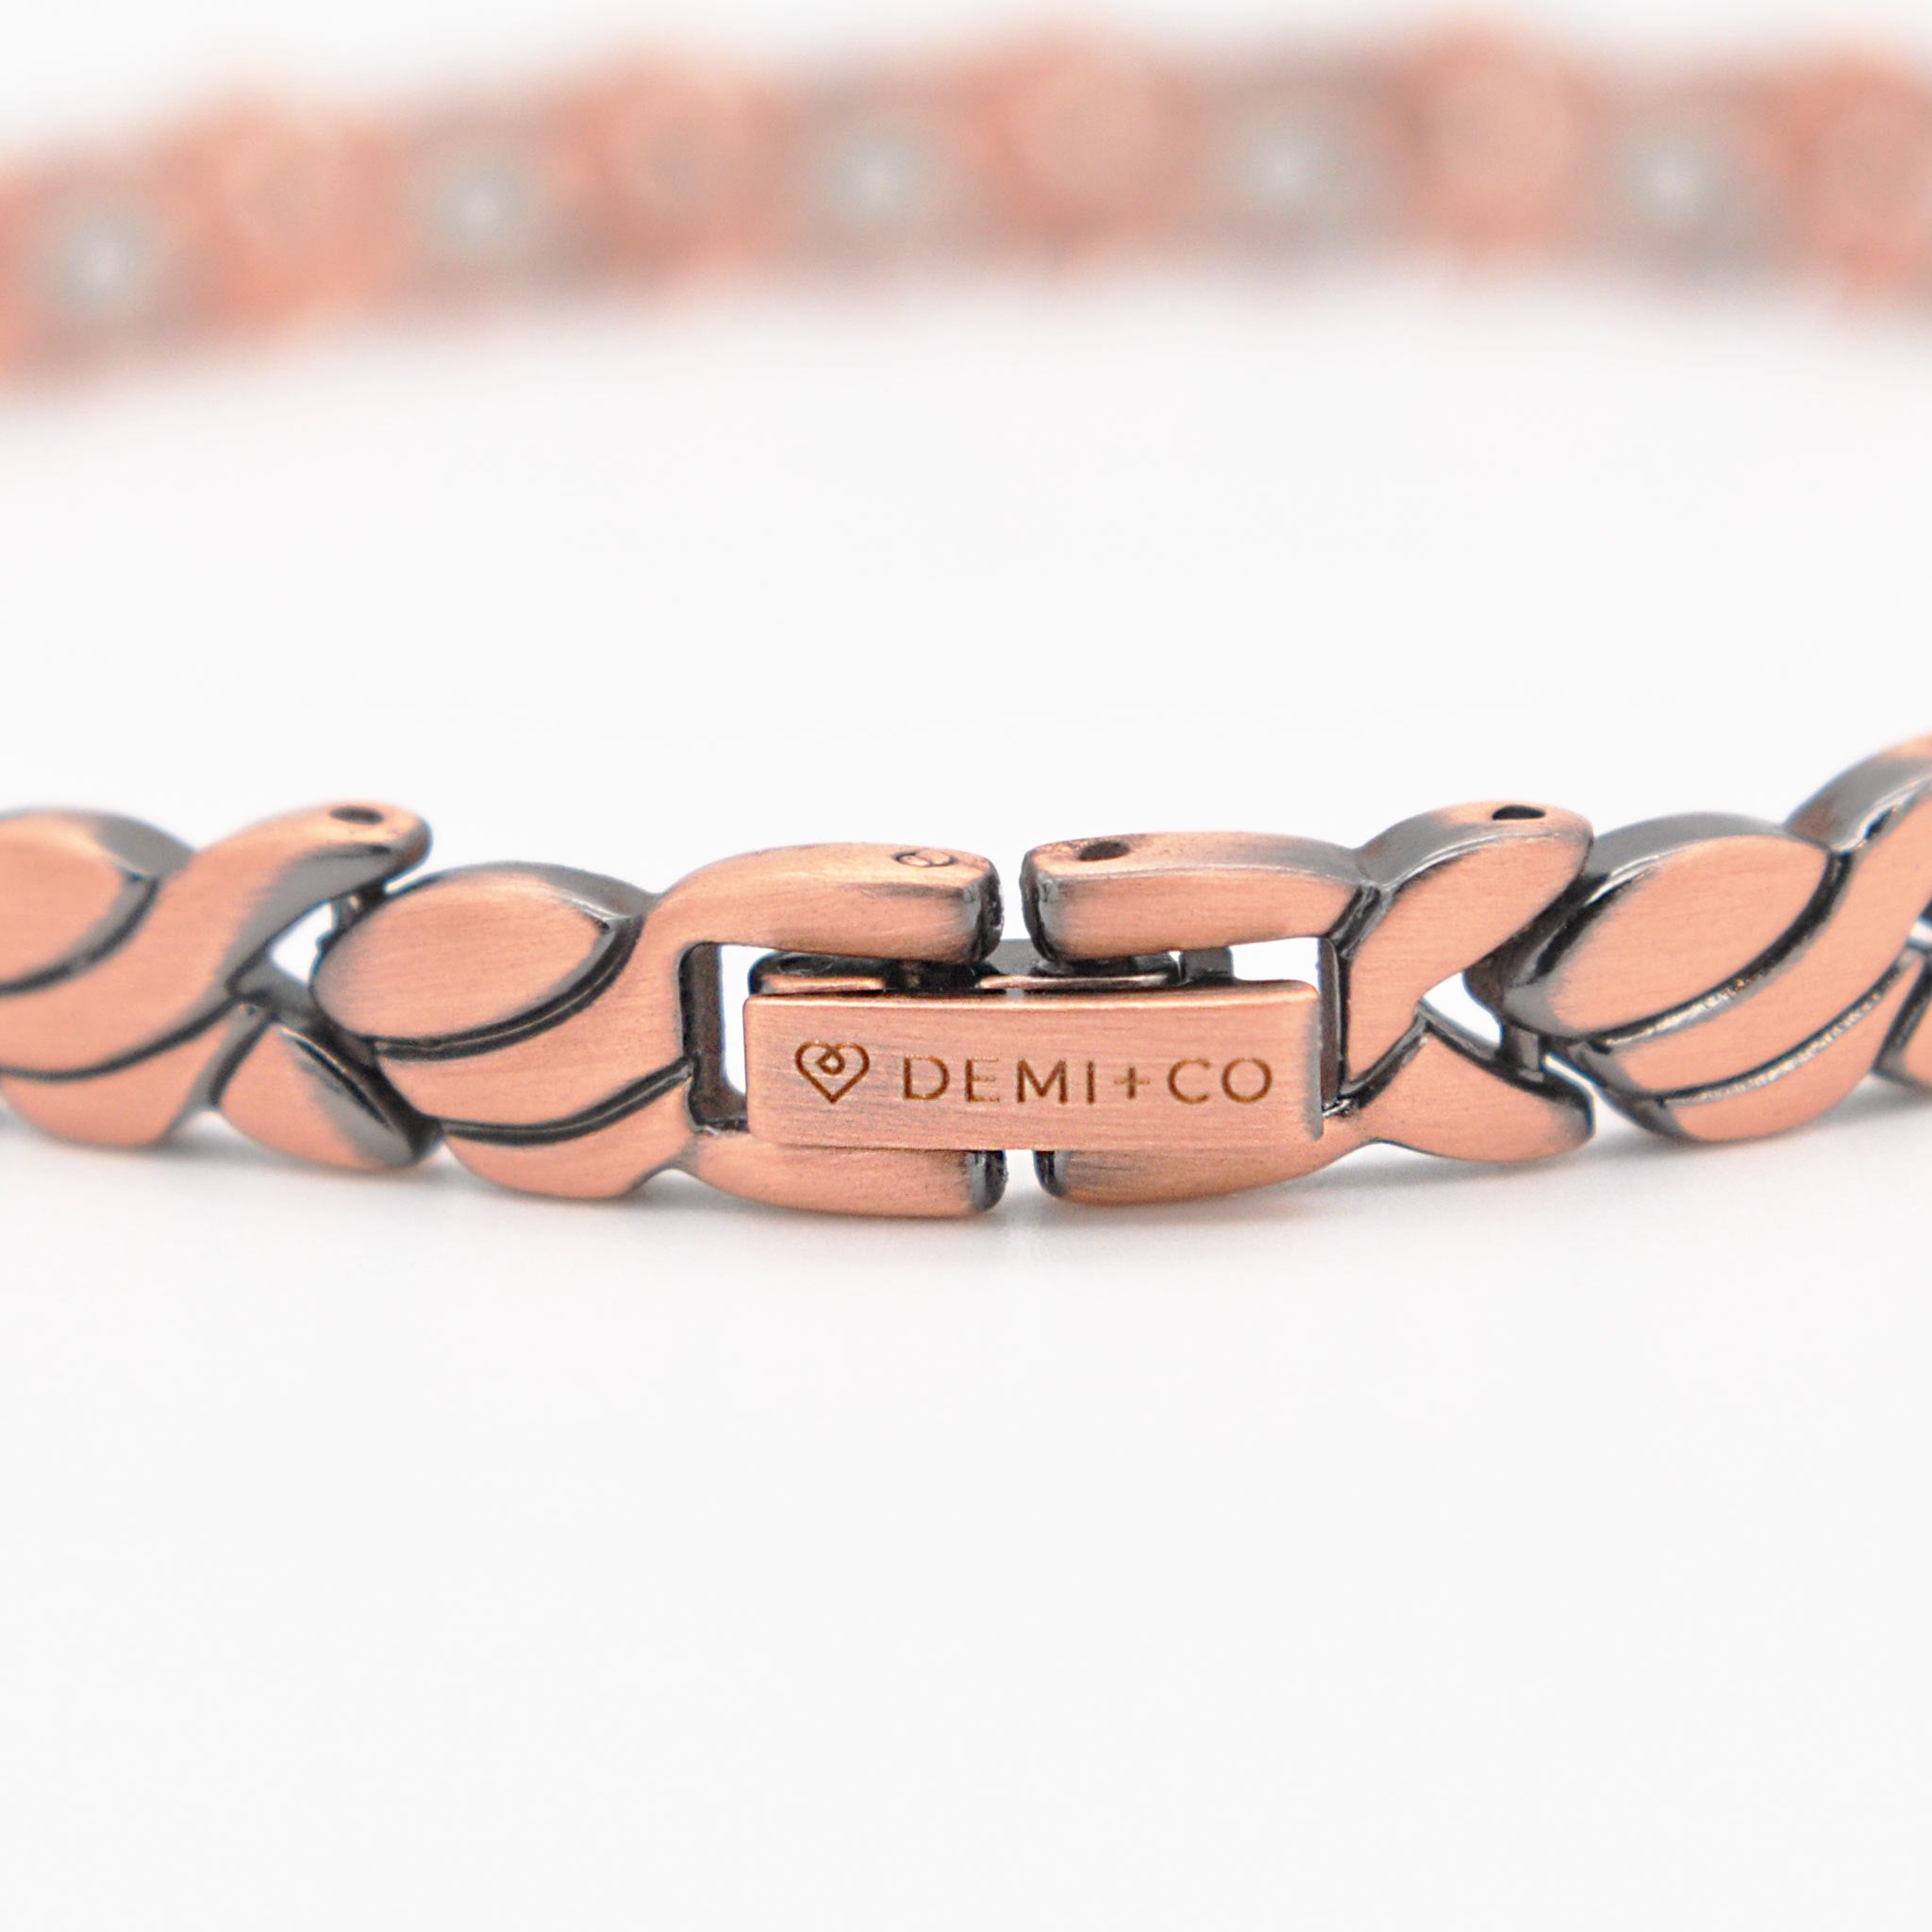 Petal copper bracelet with magnets